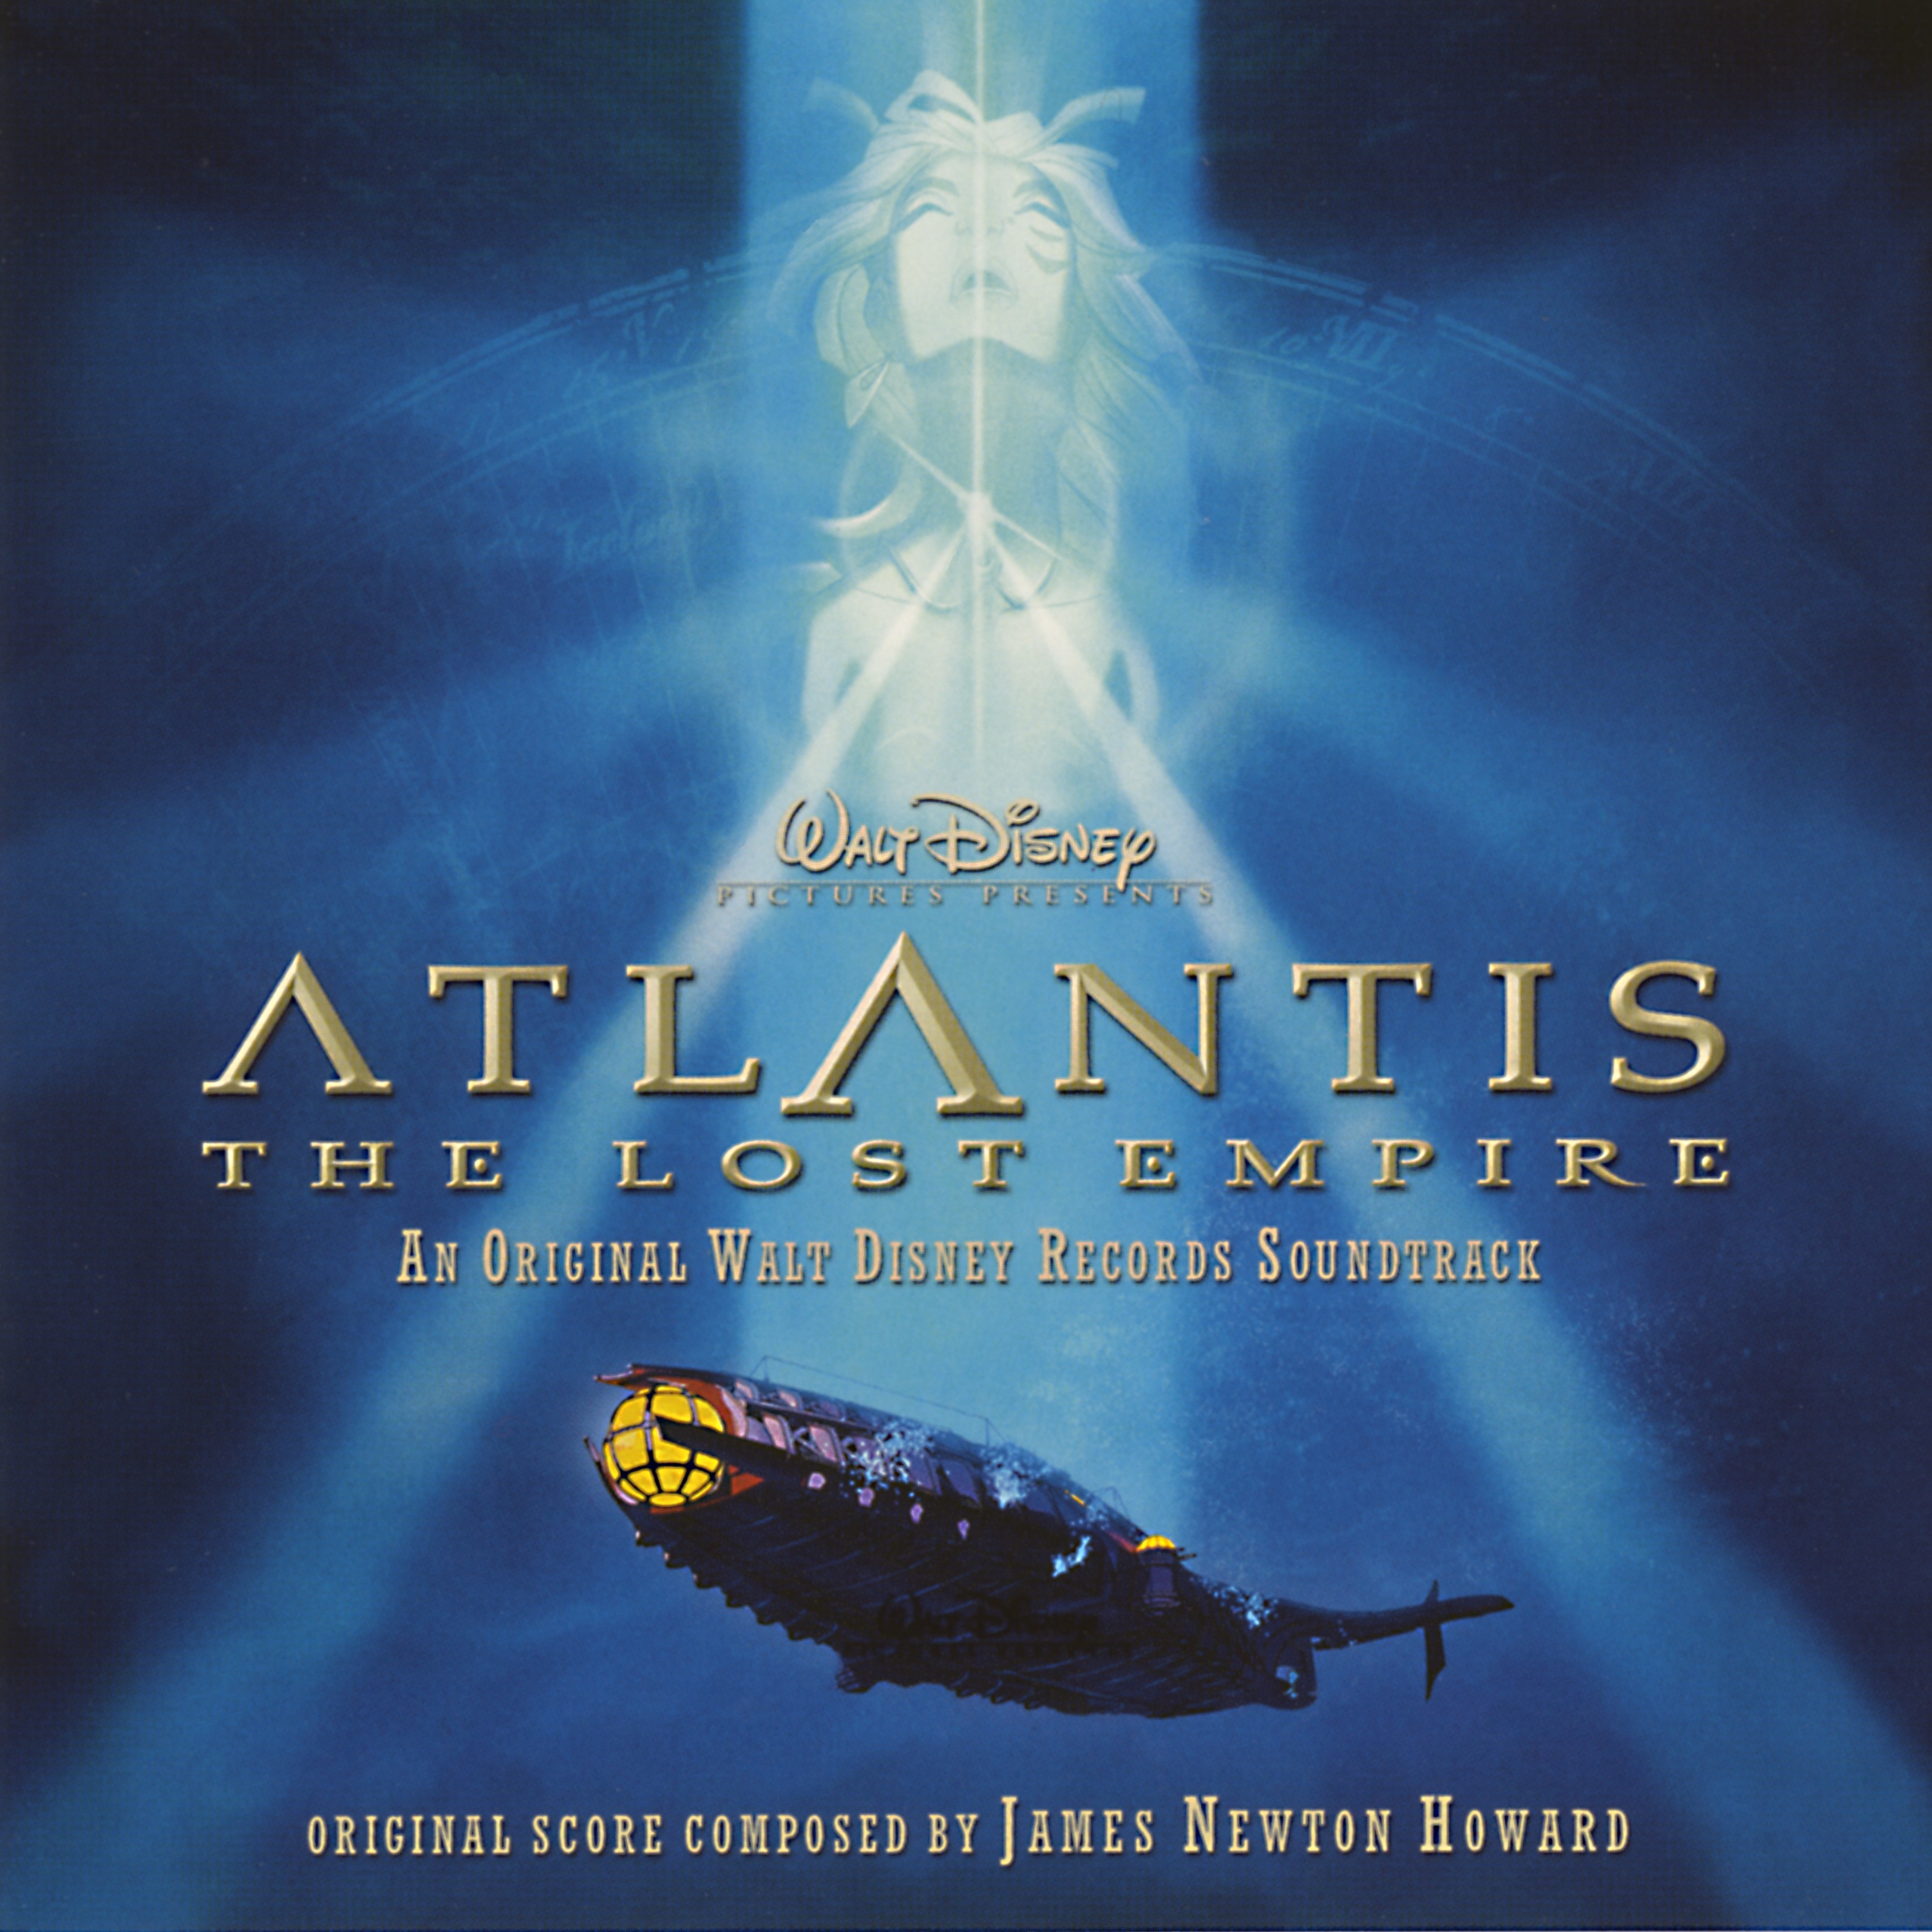 Atlantis mp3. James Newton Howard - 2001 - Atlantis the Lost Empire. Imperio Atlantis обложка. Атлантис песня.